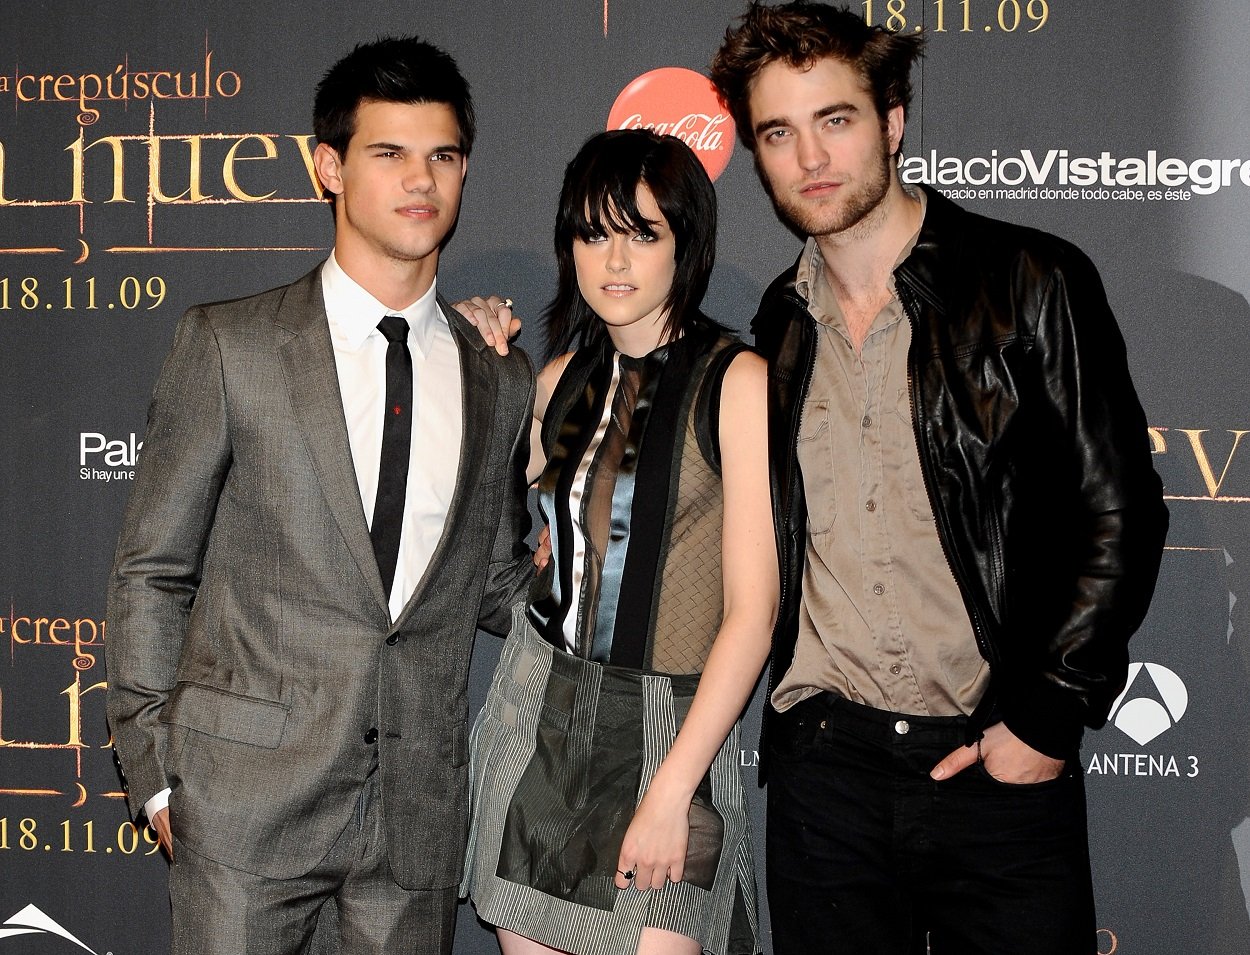 Twilight movies stars: Taylor Lautner, Kristen Stewart, and Robert Pattinson